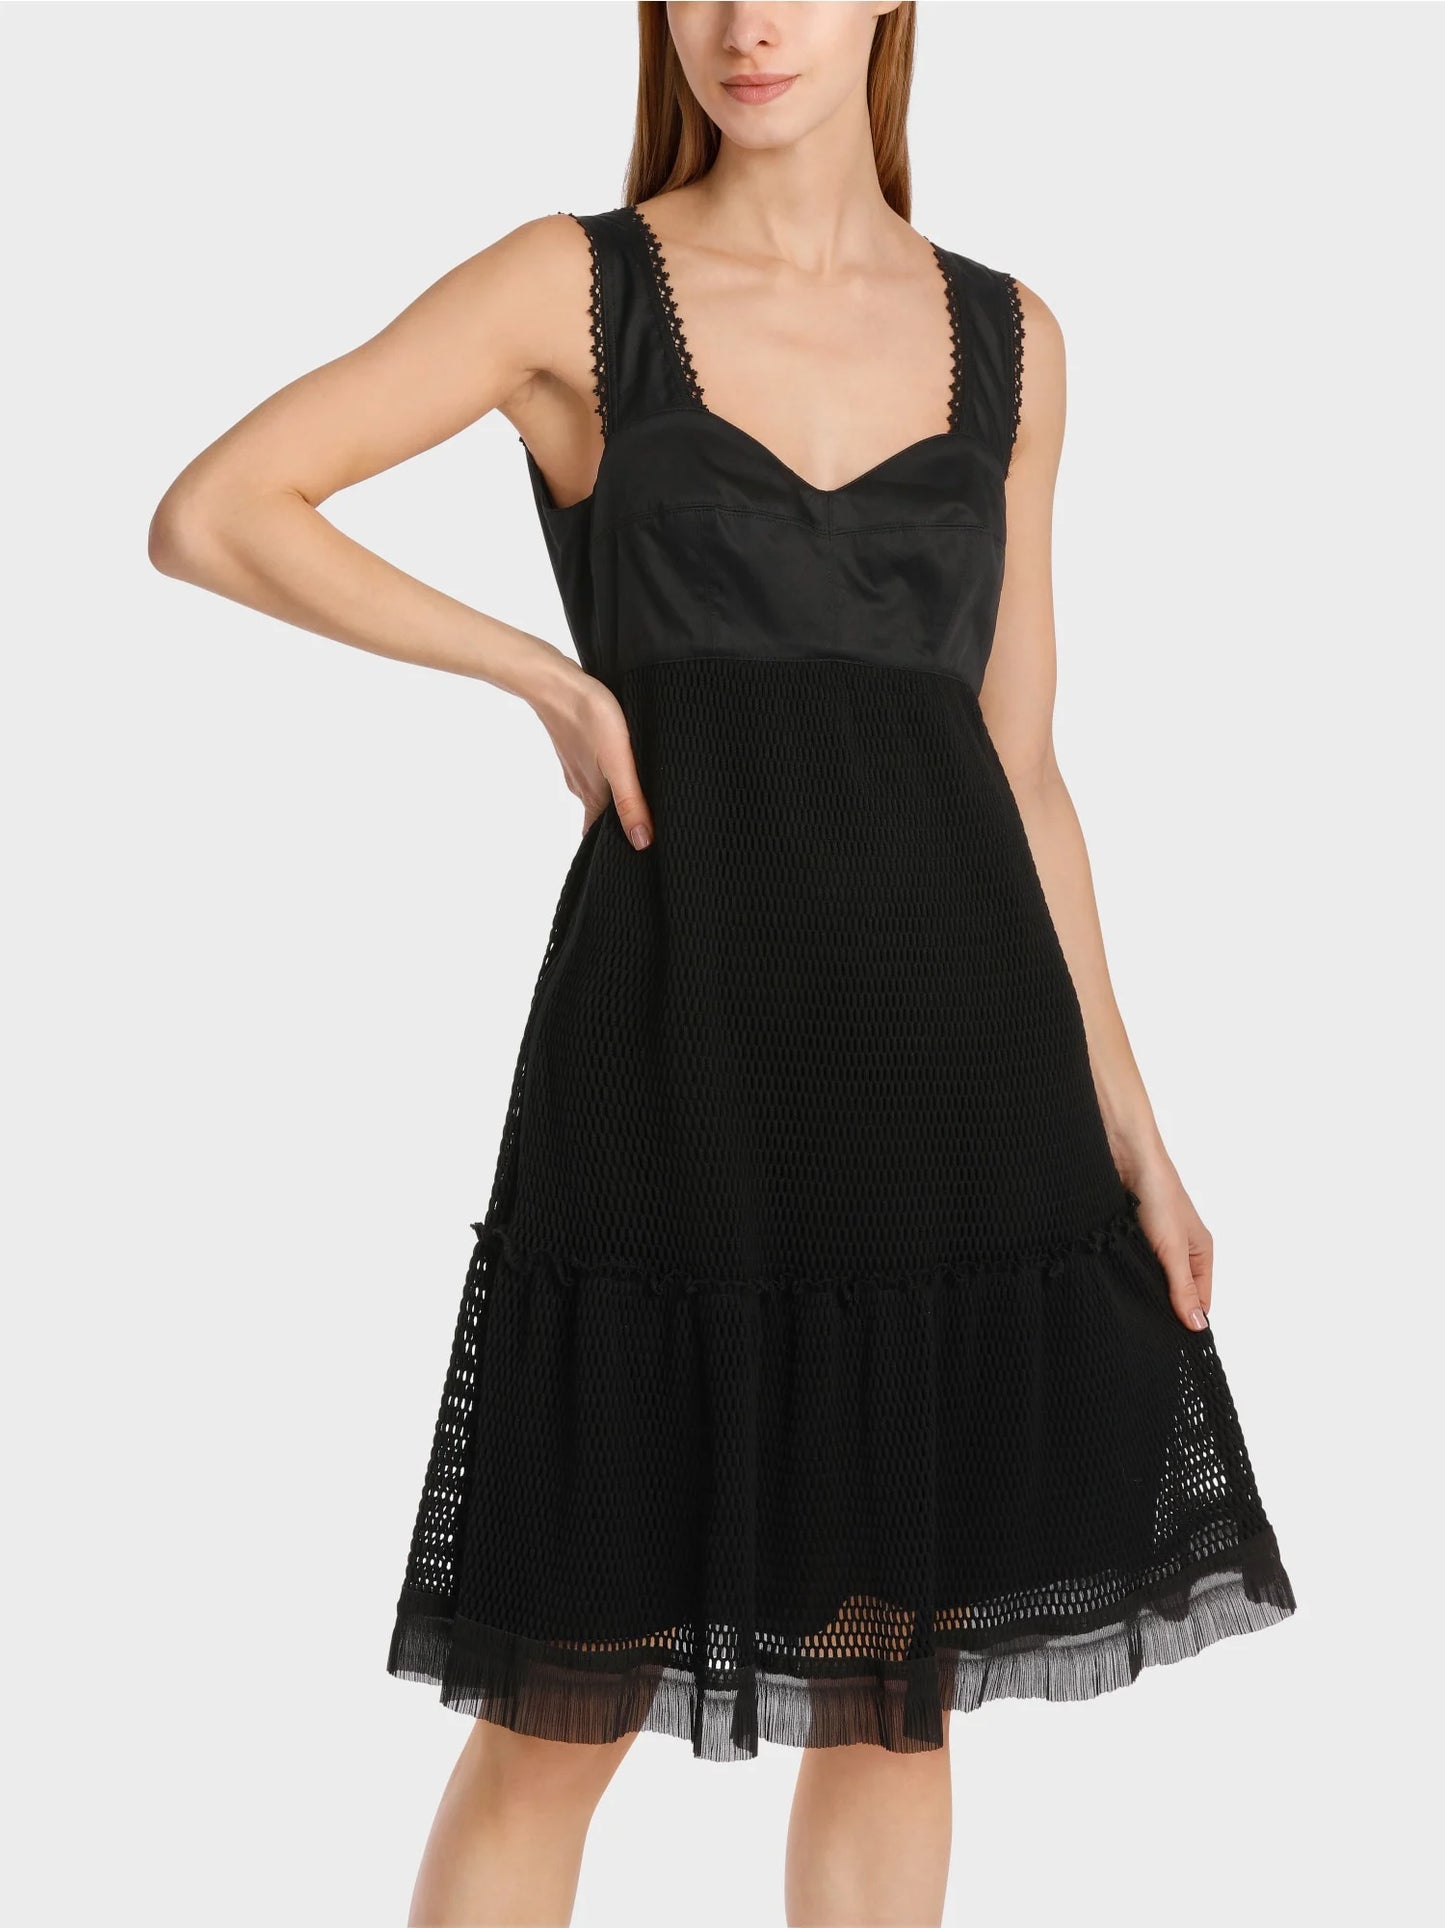 Bustier dress with mesh skirt